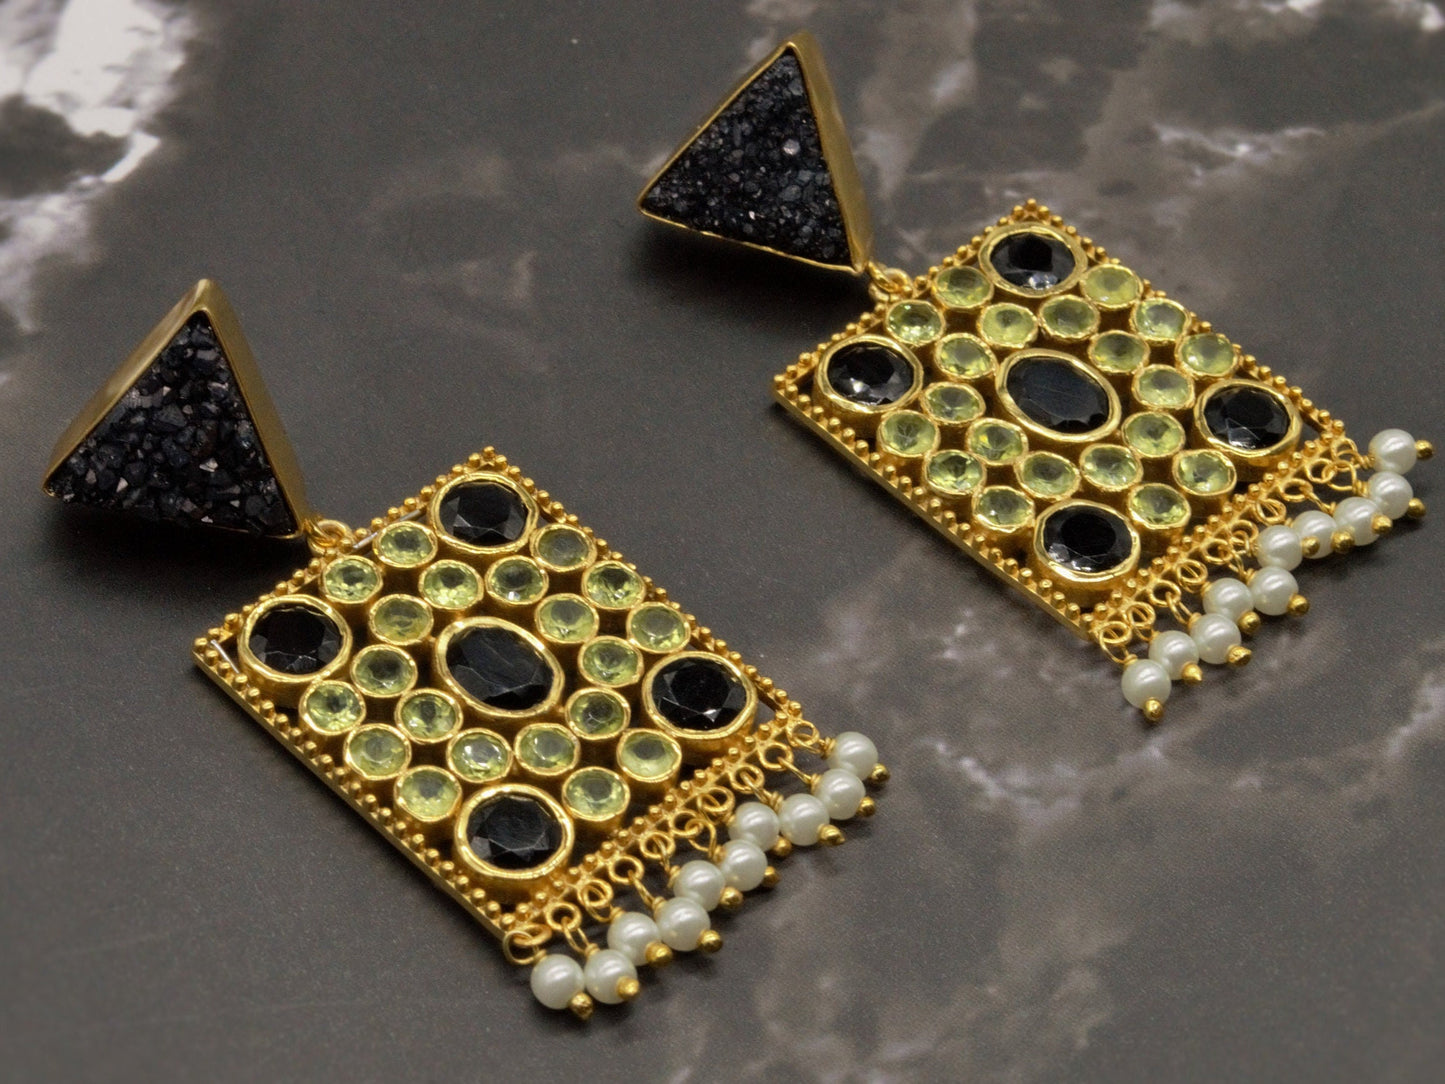 Black Agate, Onyx, Peridot Gold Earrings, August Birthstone Jewelry, Druzy Agate, Onyx Drop Earrings, Ethnic Indian Jhumka Earrings